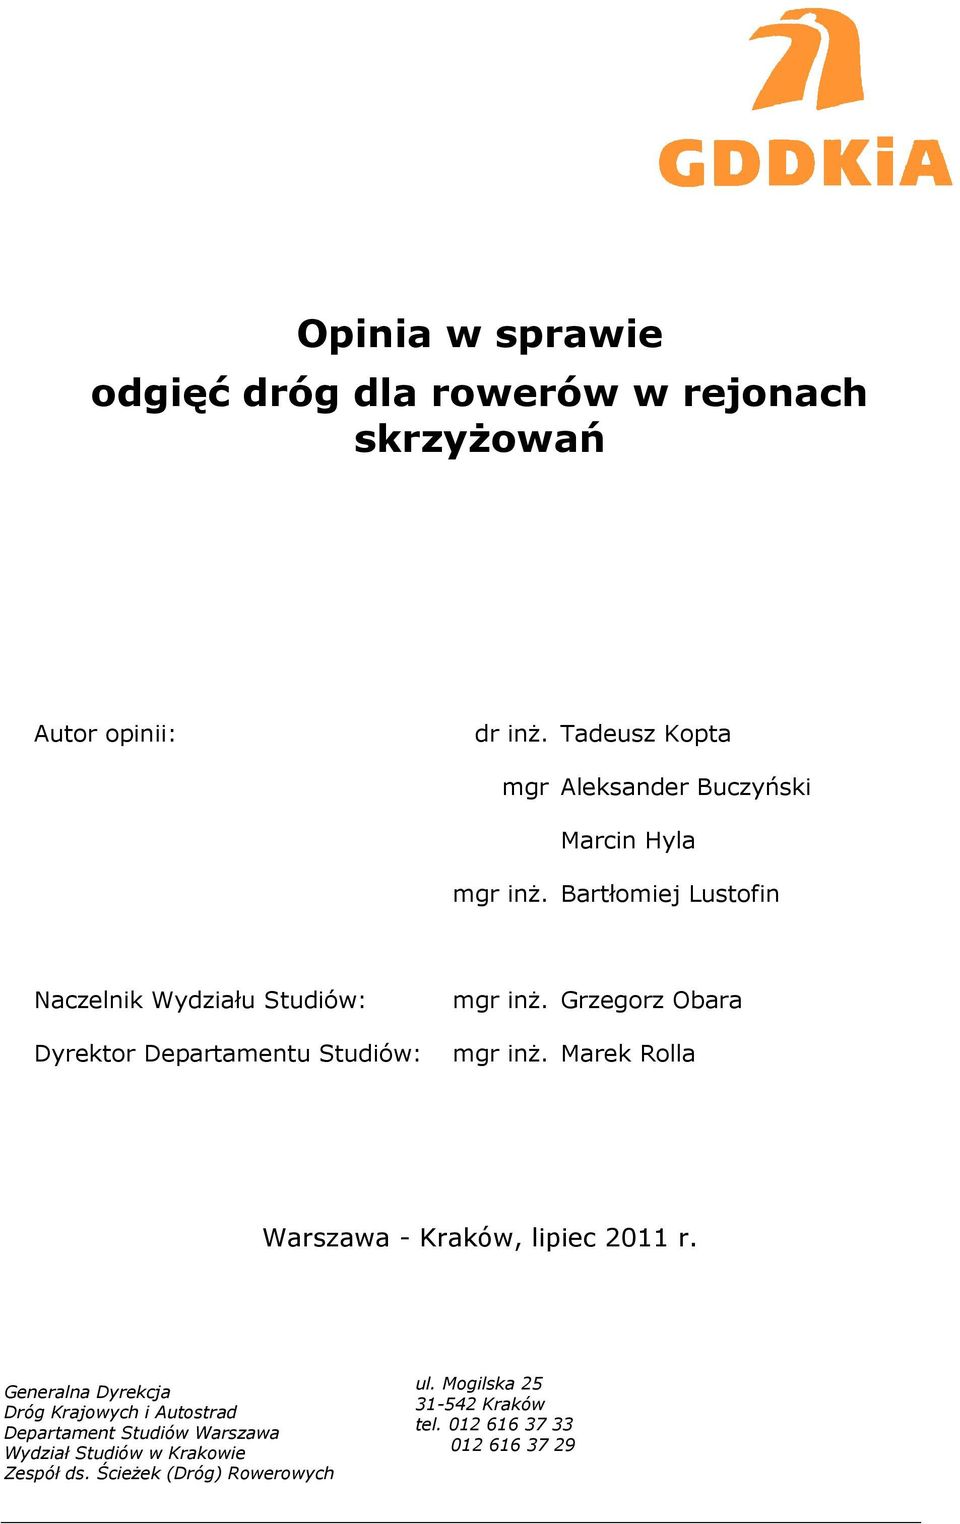 Grzegorz Obara Dyrektor Departamentu Studiów: mgr inż. Marek Rolla Warszawa - Kraków, lipiec 2011 r.